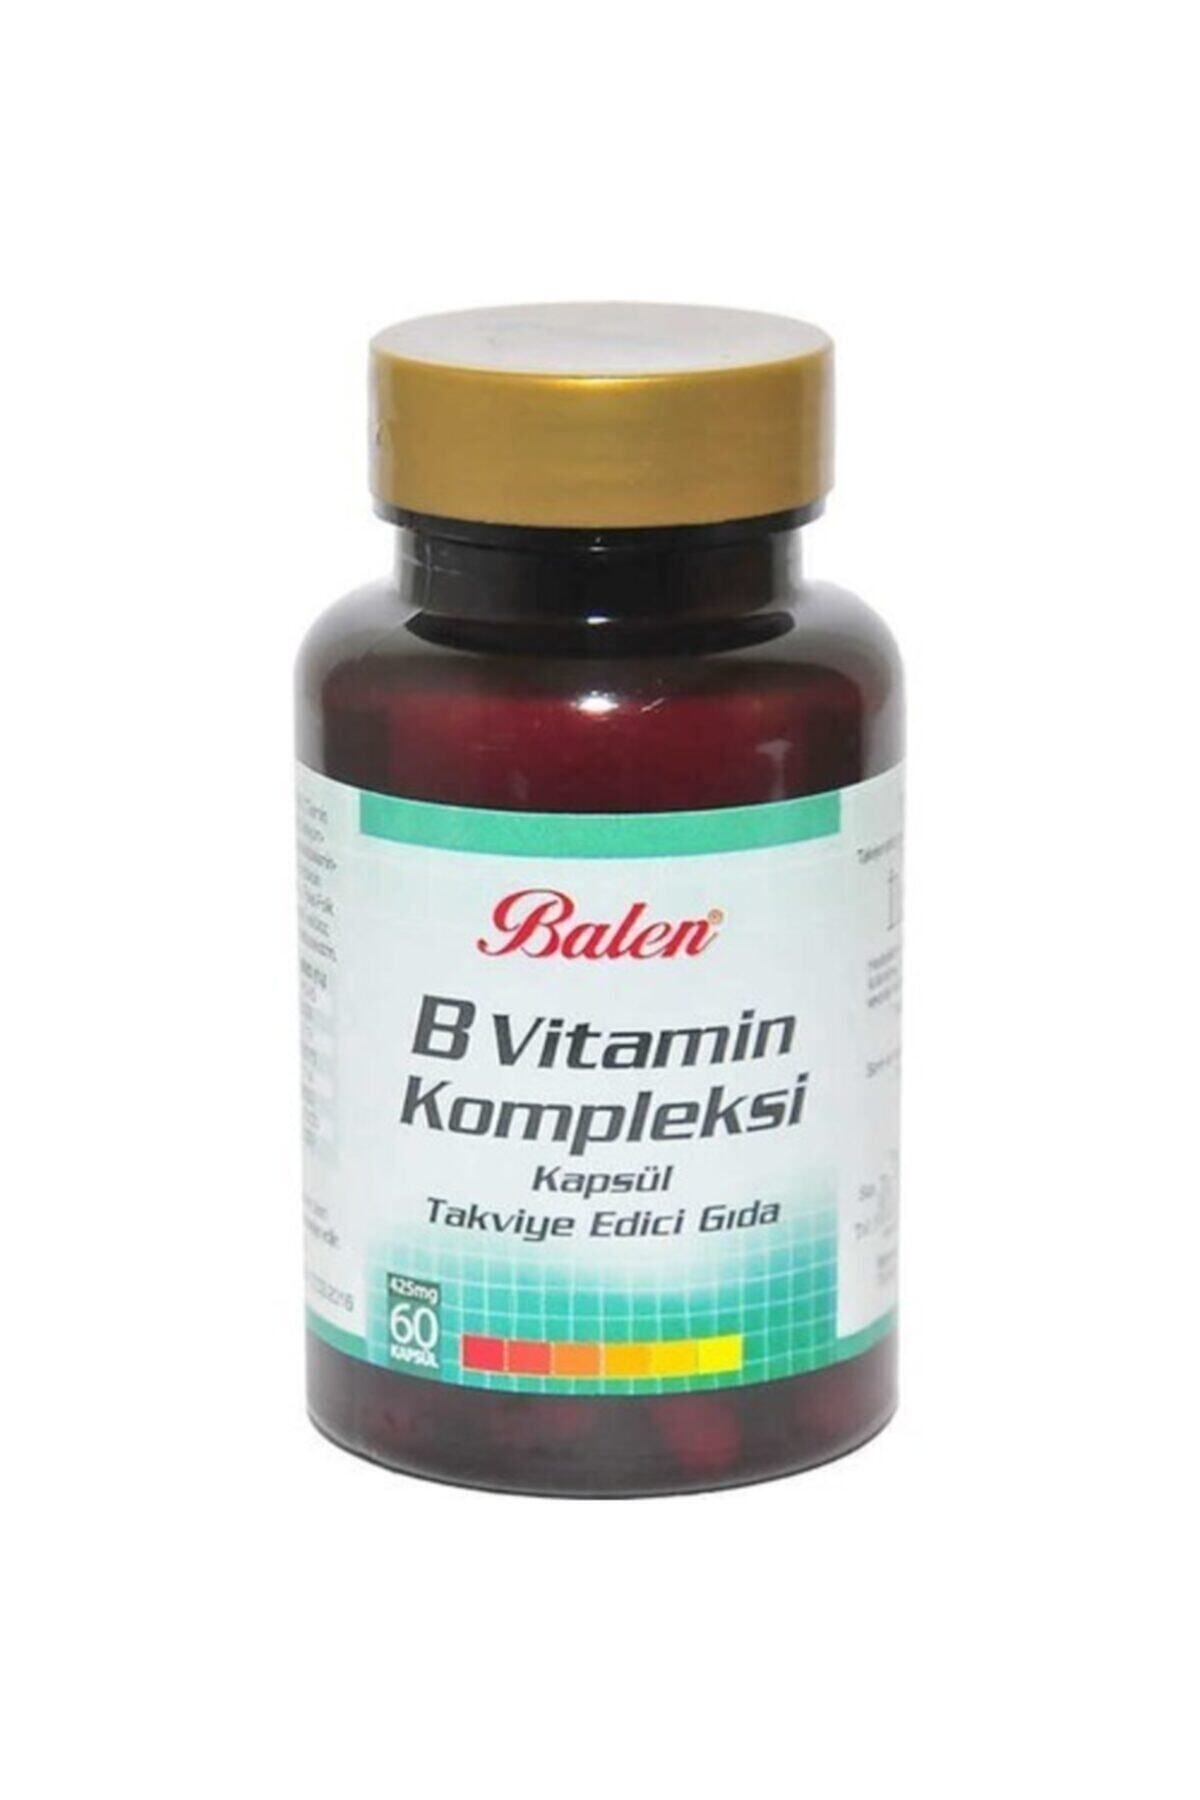 Balen B Vitamin Kompleksi 425 Mg* 60 Kapsül